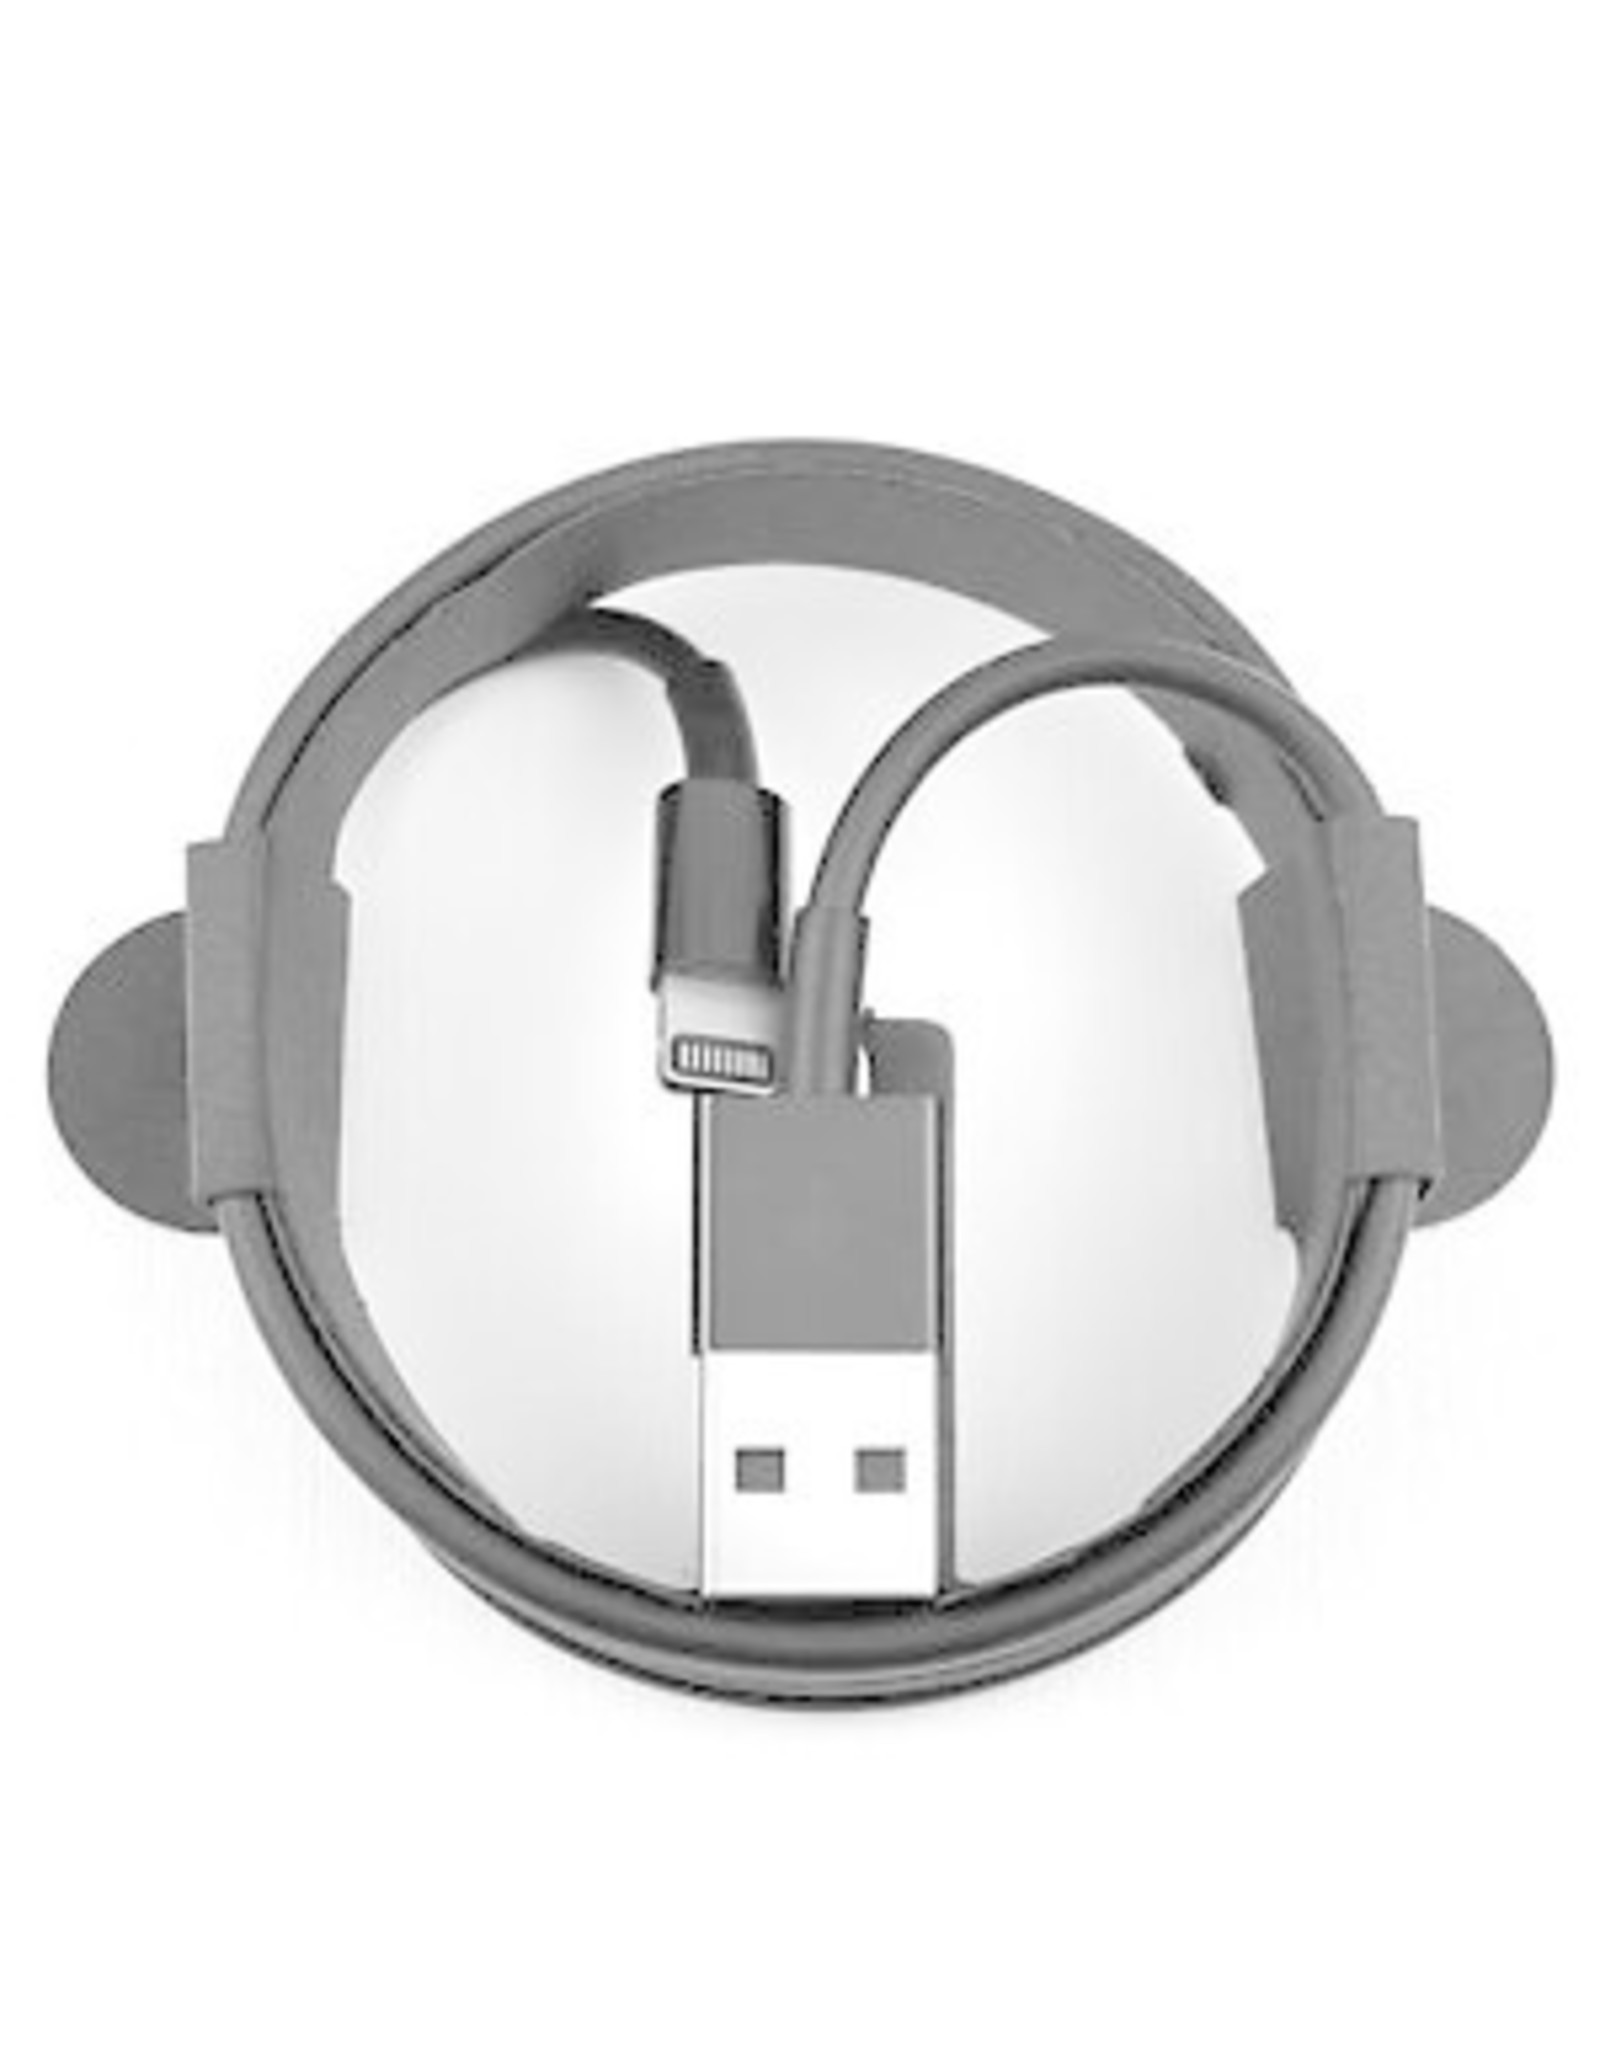 Apple Apple Lightning to USB Cable (1m) - BLACK